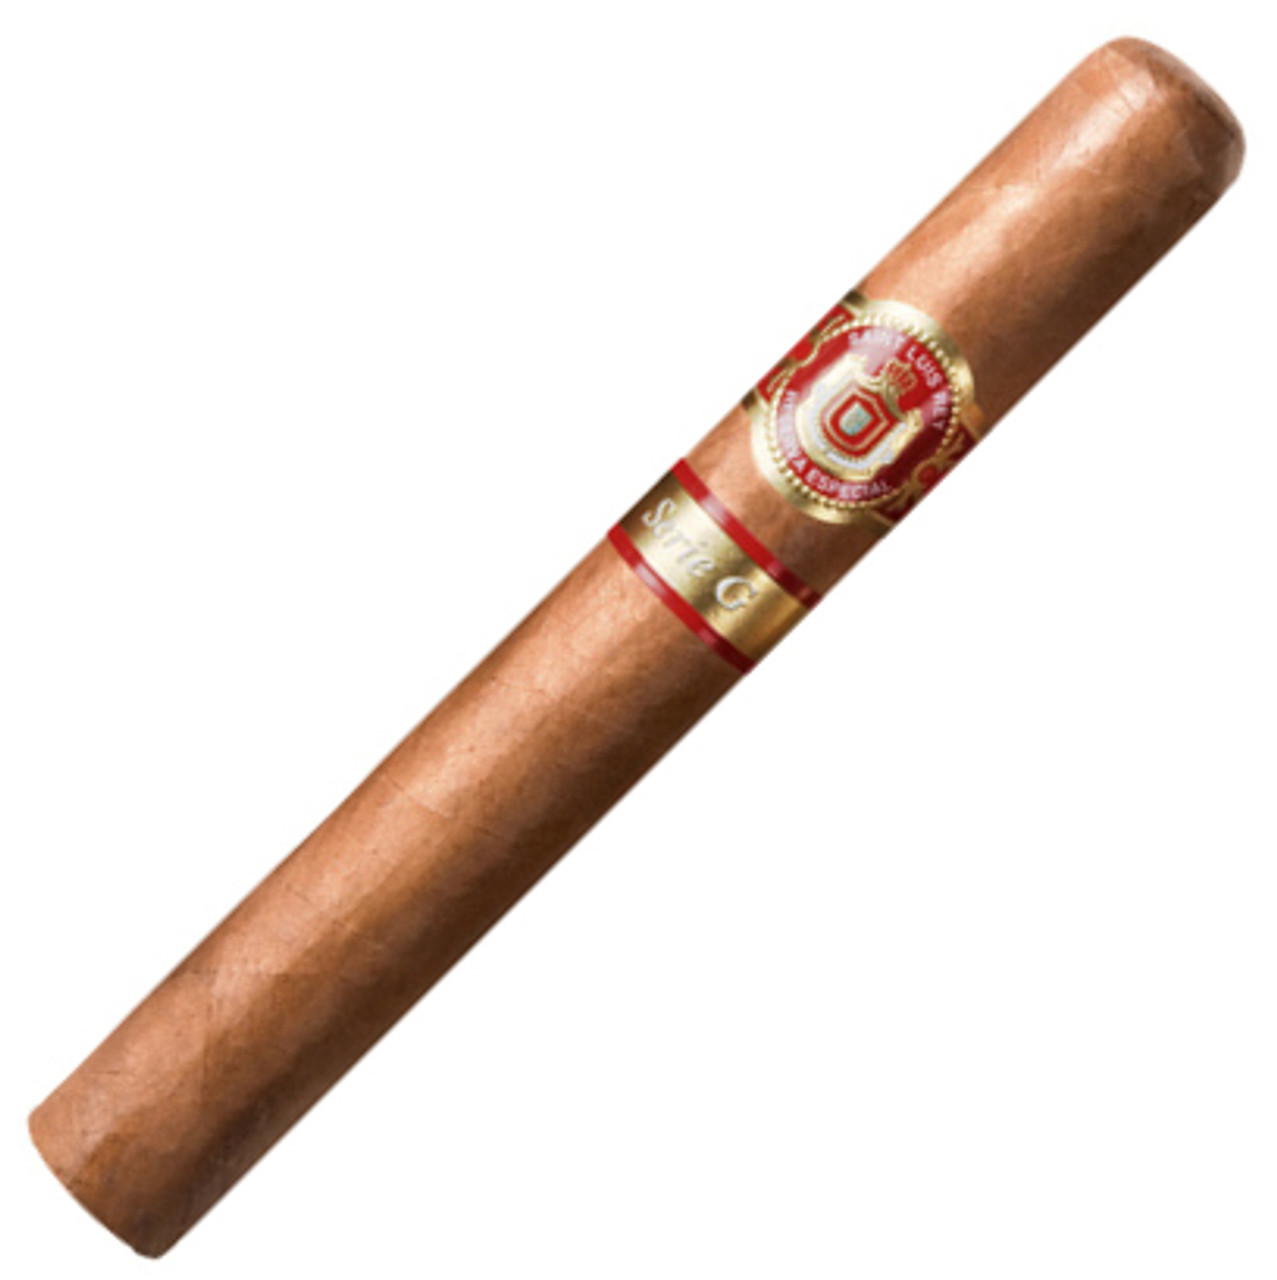 Saint Luis Rey Serie G Churchill Cigars - 7 x 58 (Box of 25)